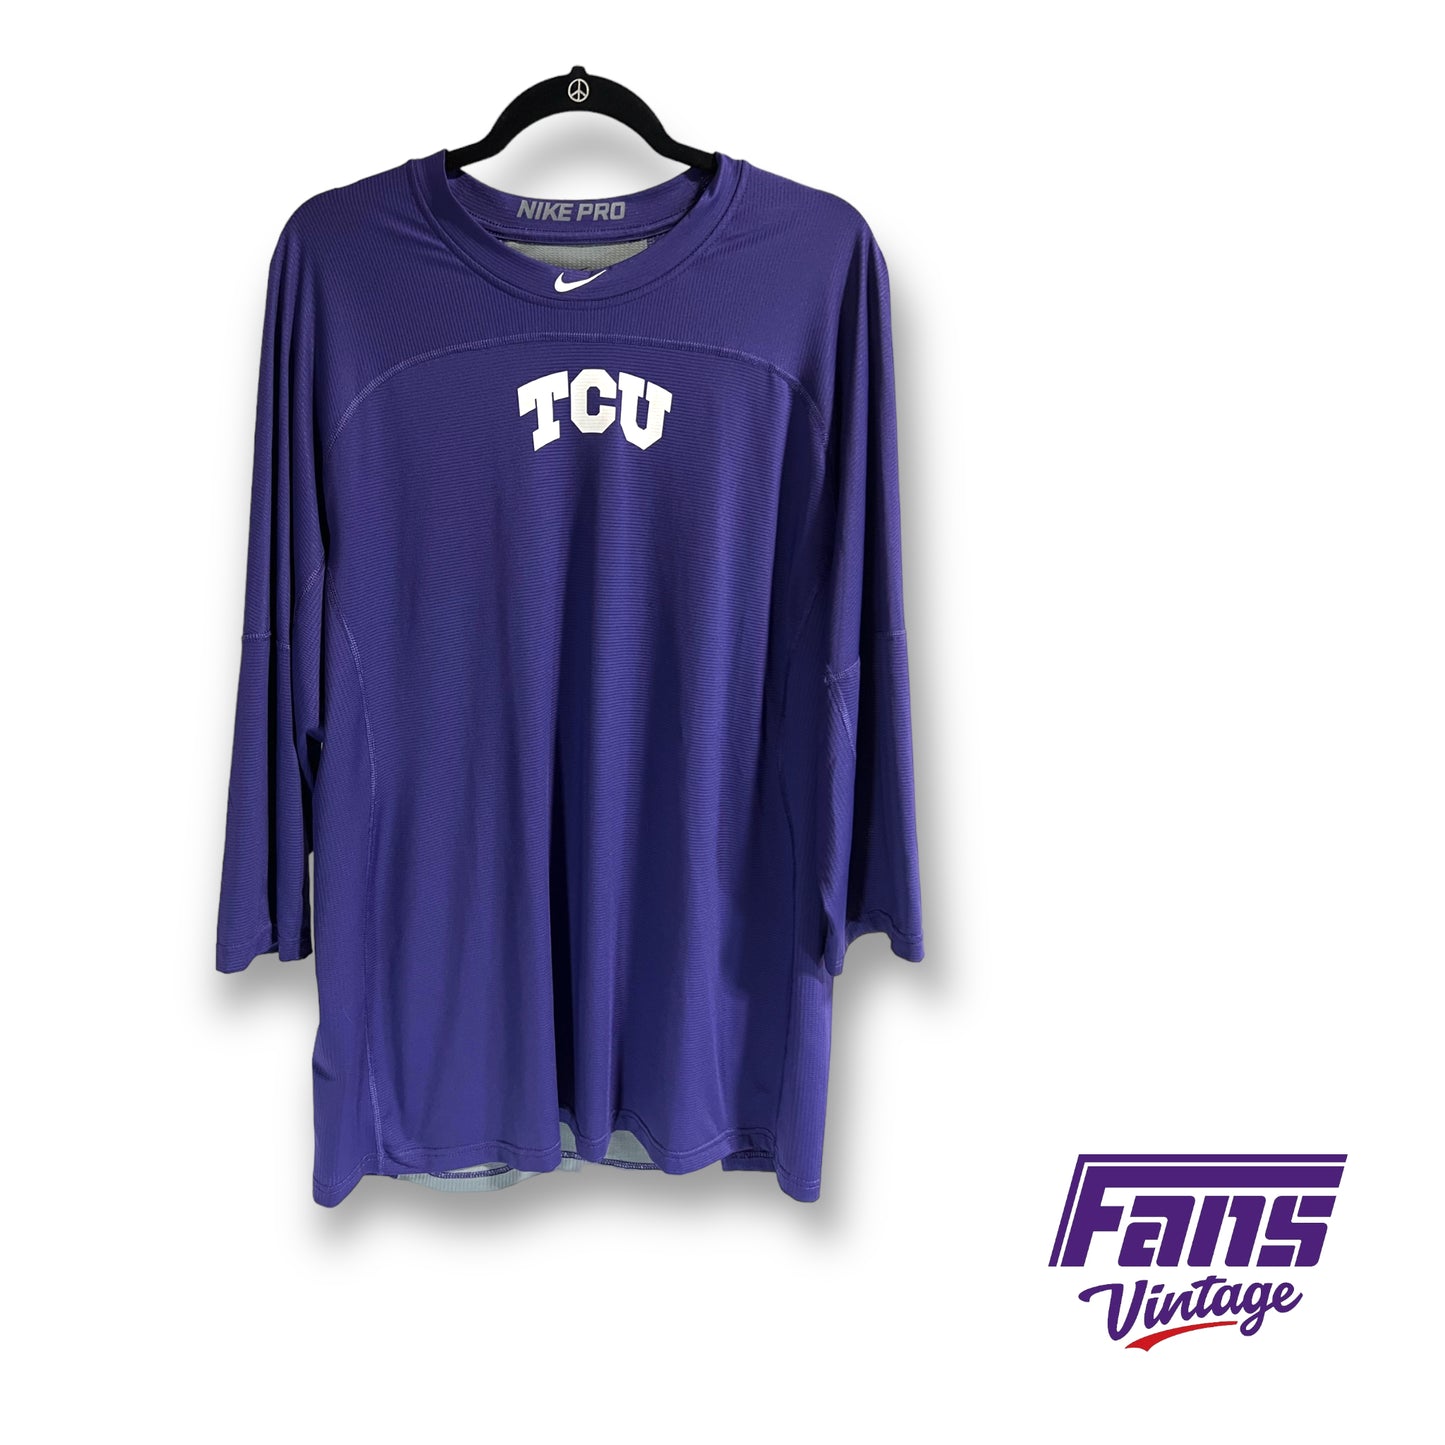 Nike Pro TCU Baseball 3/4 sleeve dri-fit shirt